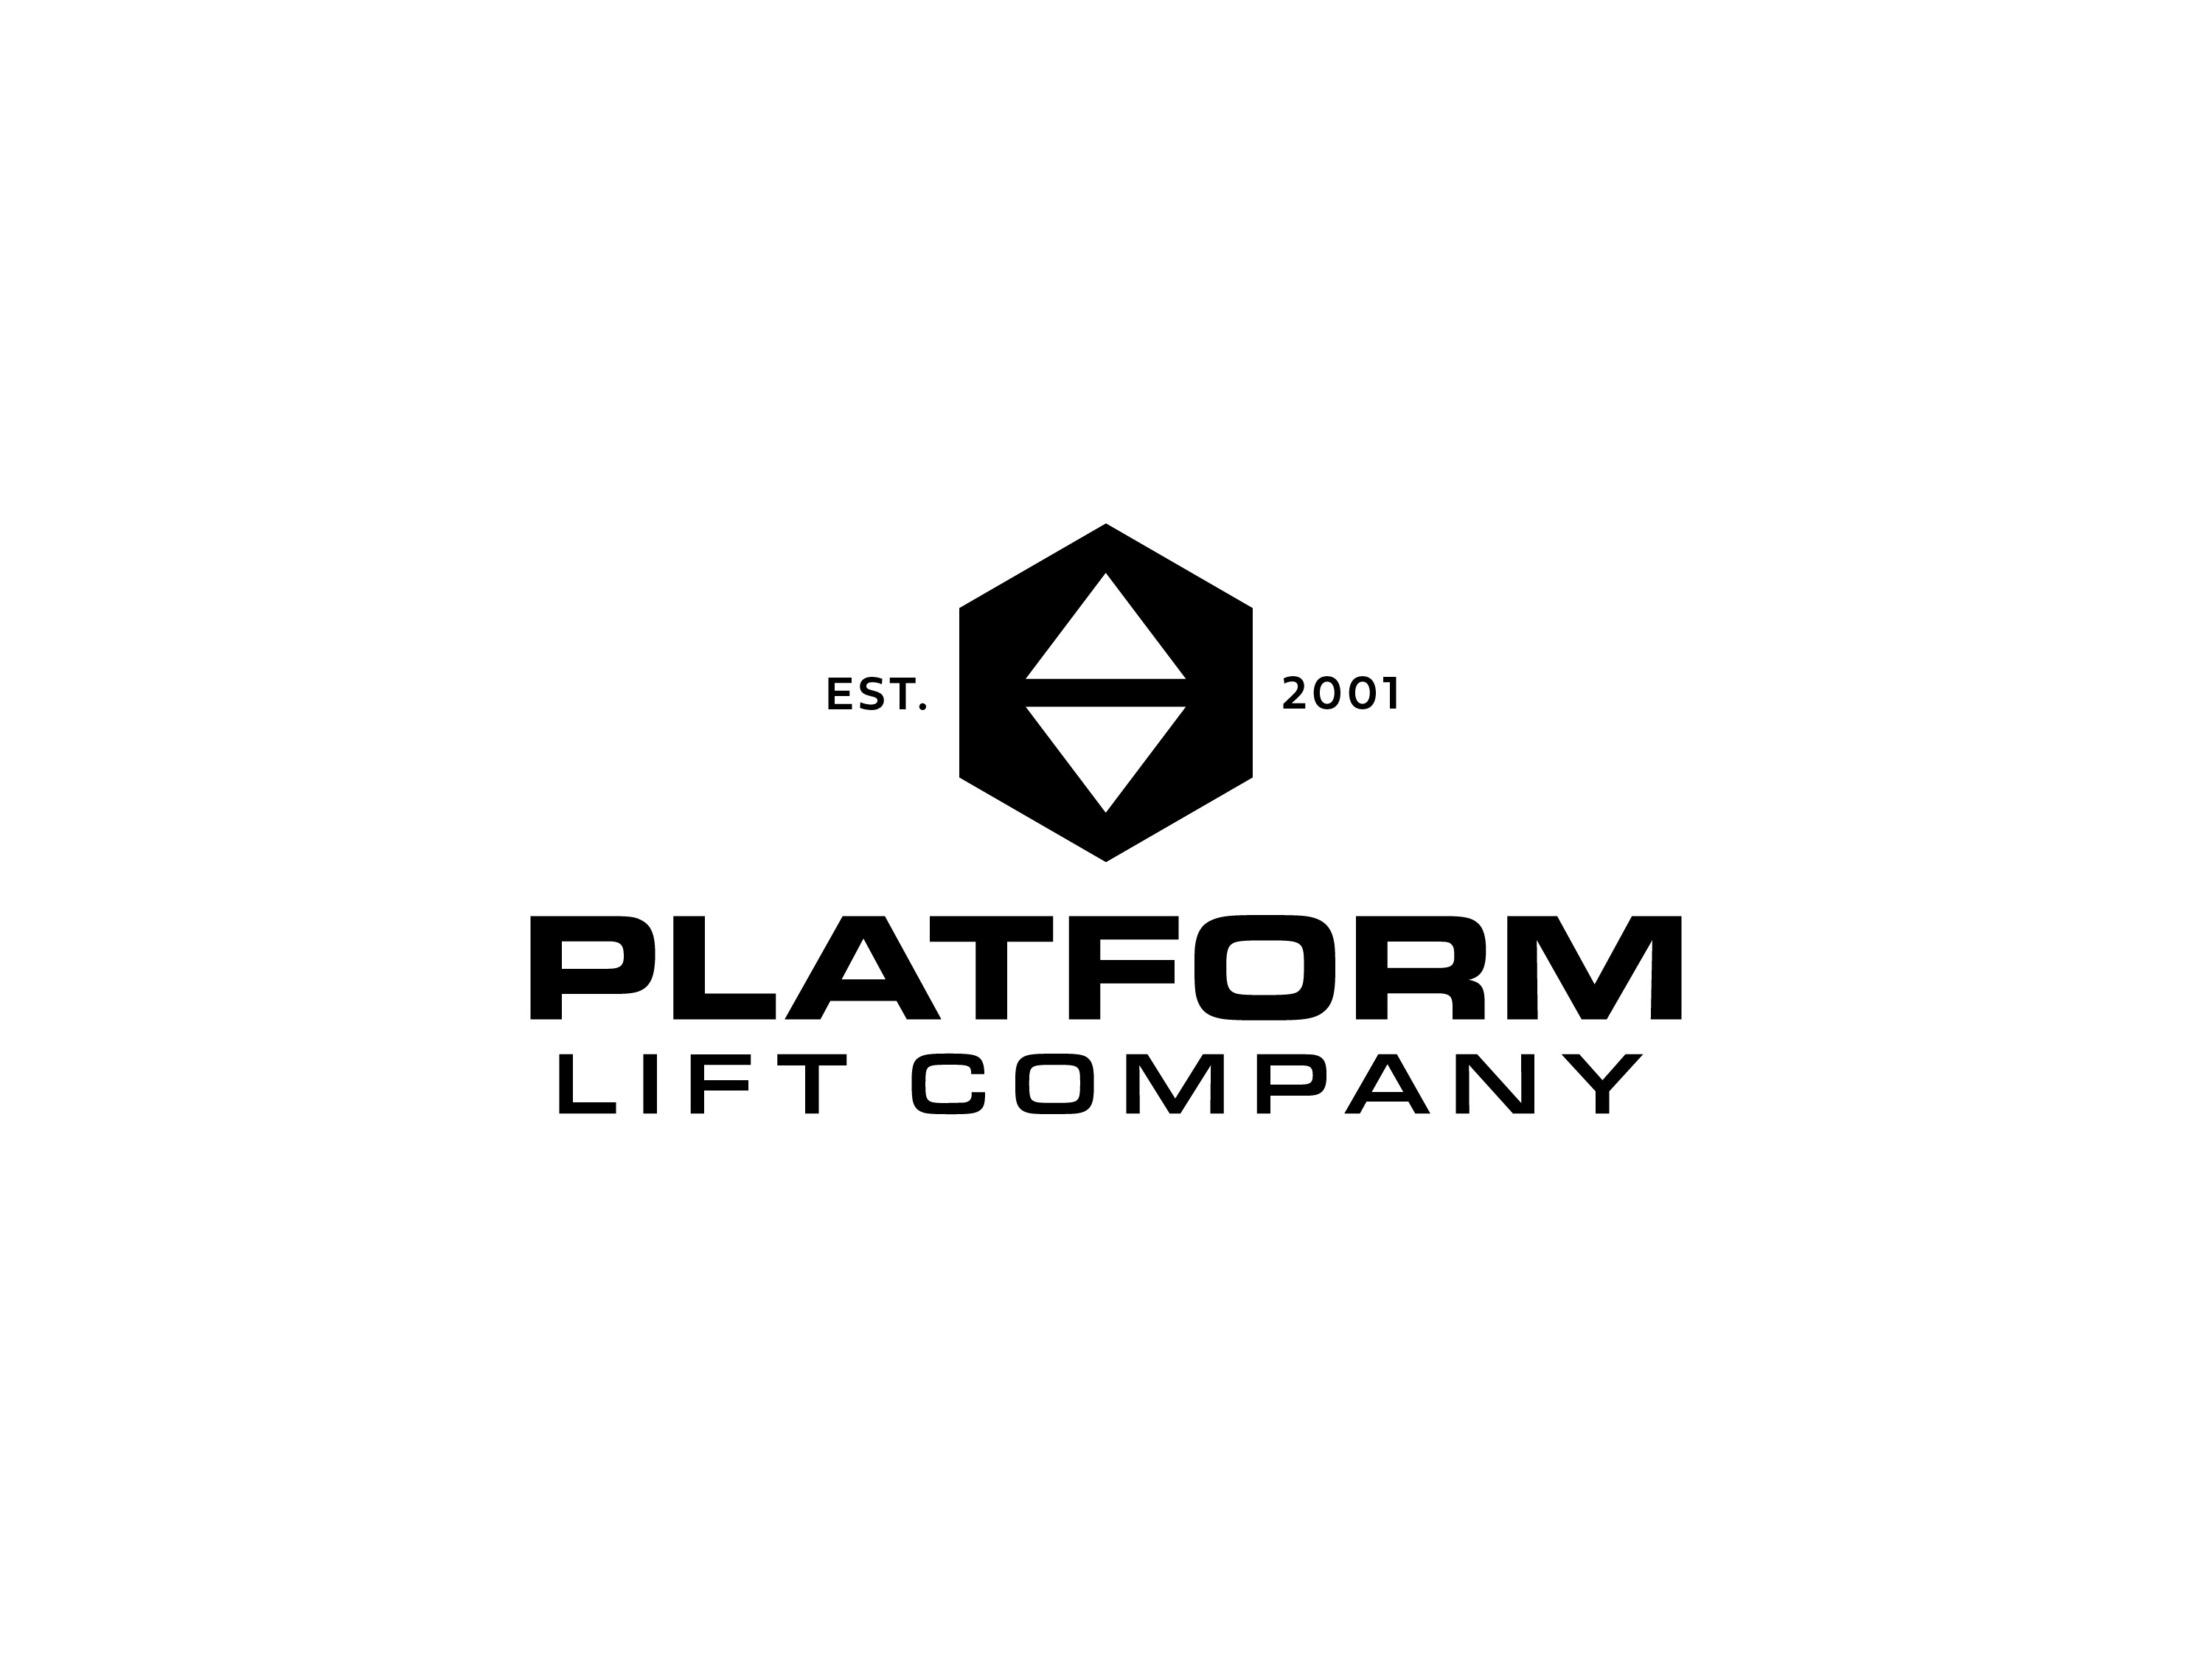 The Platform Lift Company